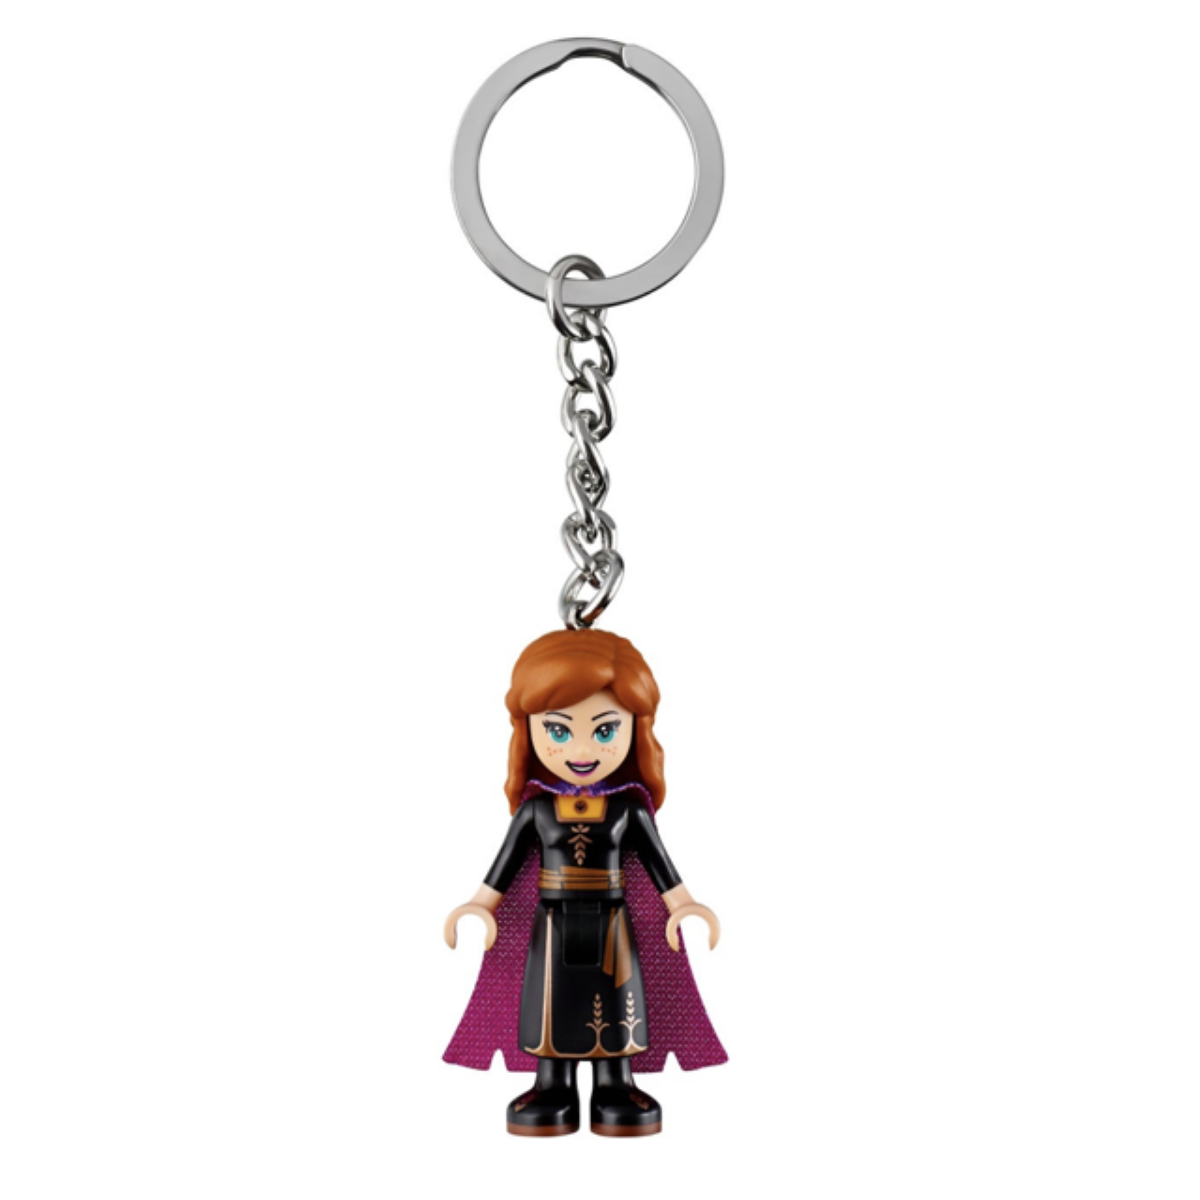 LEGO® Disney Frozen Anna Key Chain Keyring